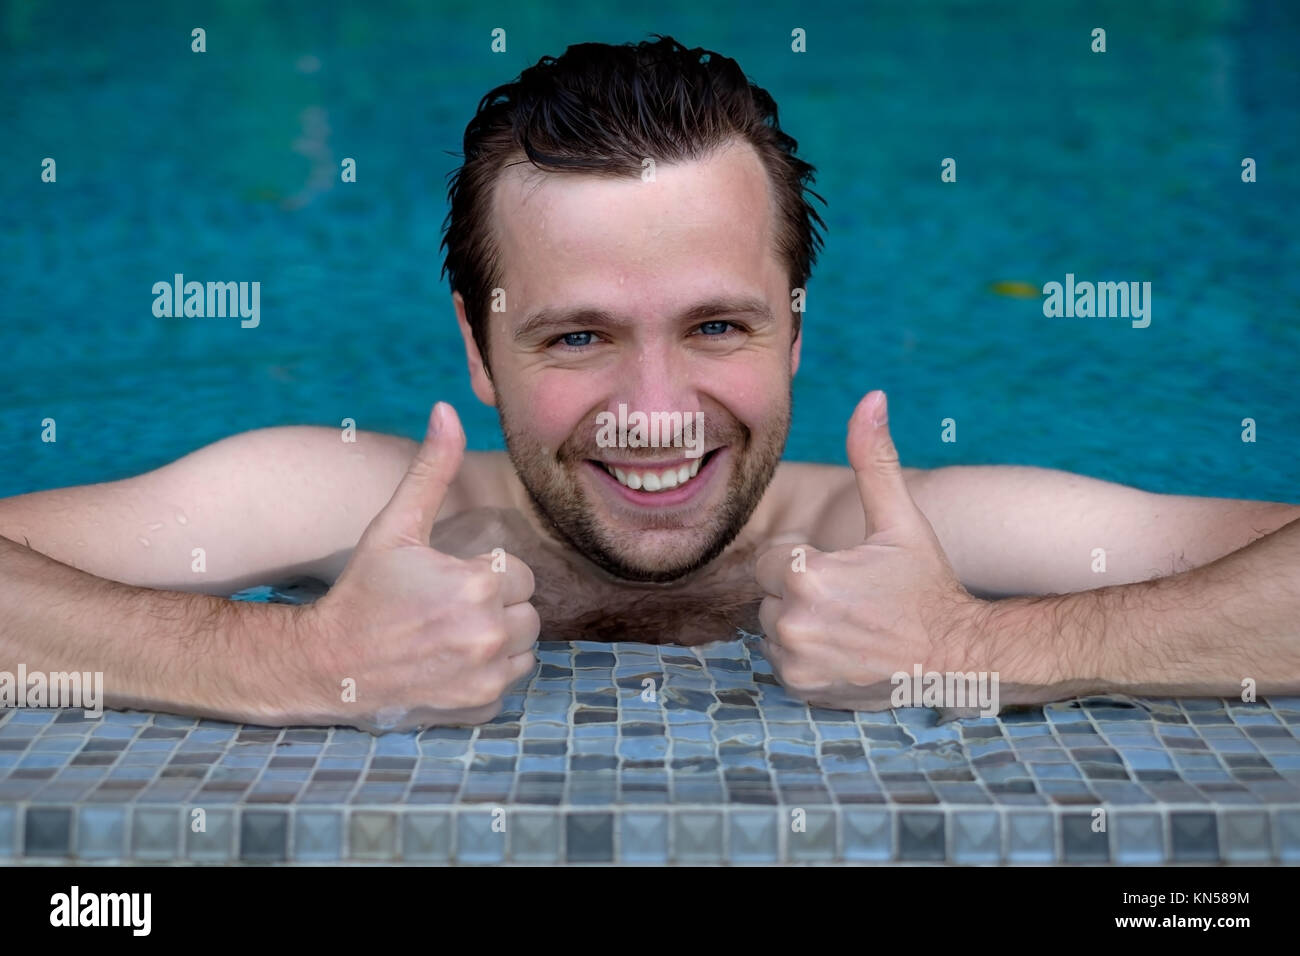 Felice wet uomo caucasico in piscina mostra Thumbs up. Foto Stock